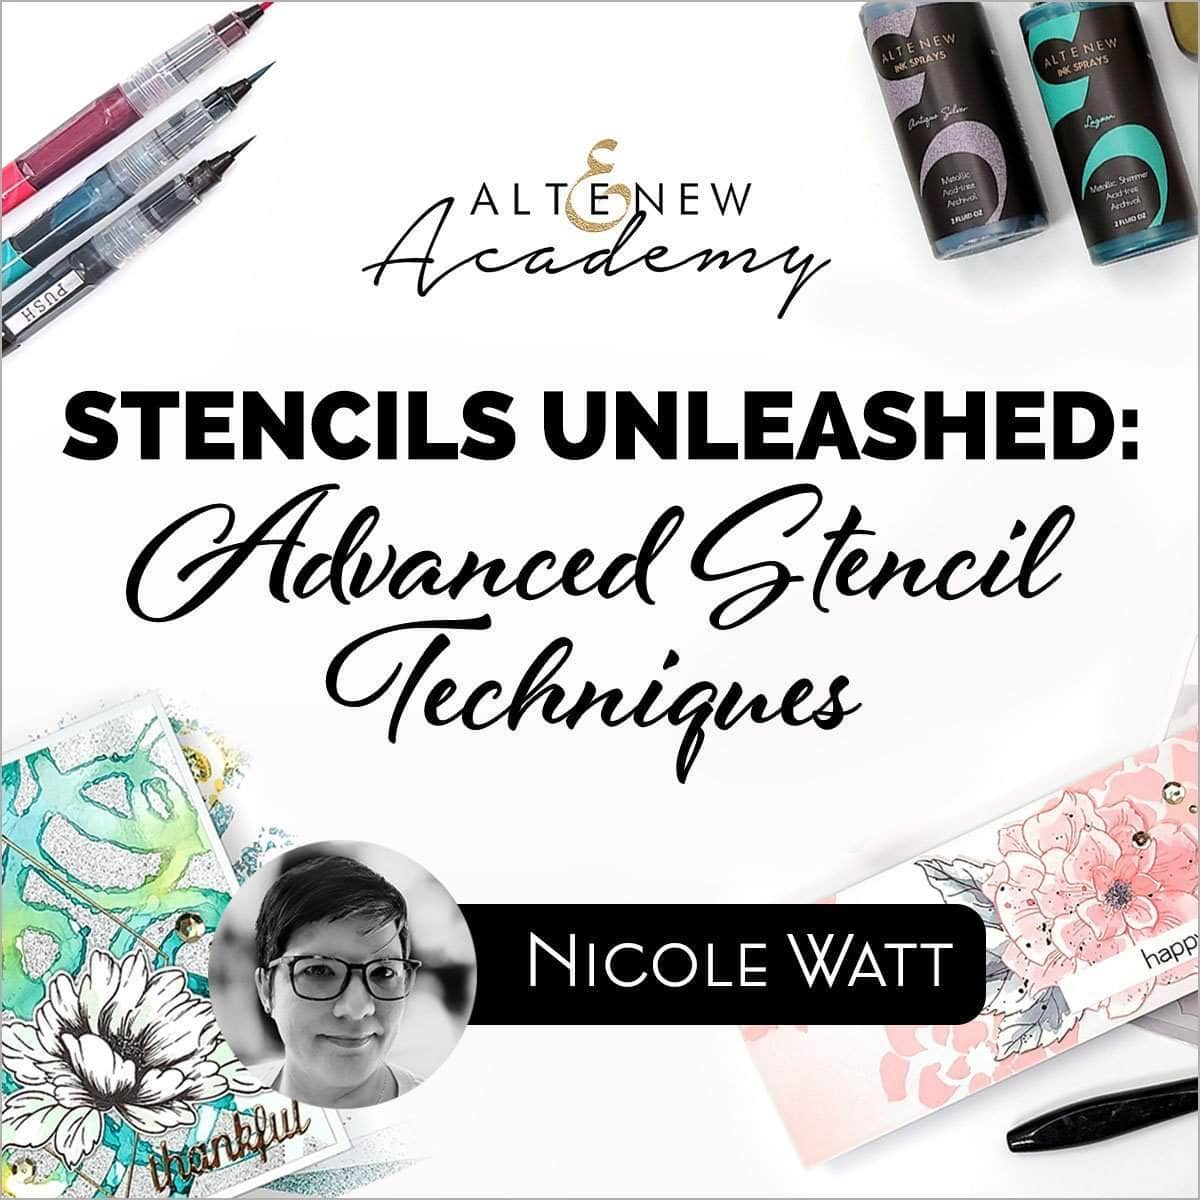 Altenew Class Stencils Unleashed: Advanced Stencil Techniques Cardmaking Class